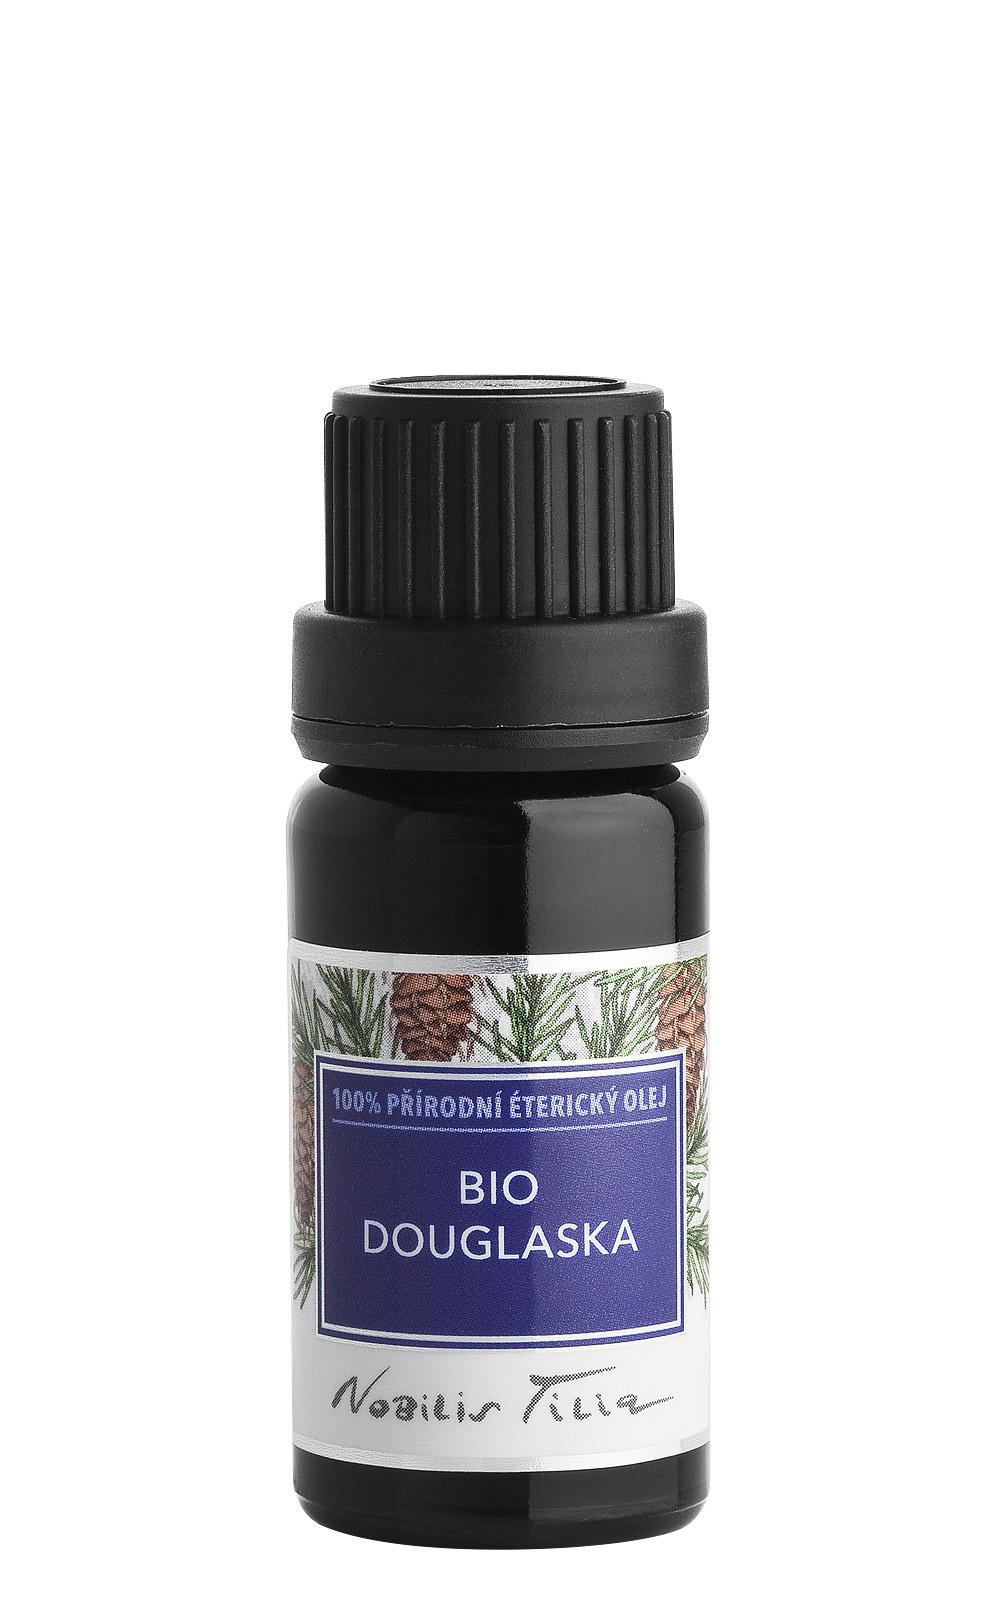 Nobilis Tilia Éterický olej bio Douglaska Obsah: 10 ml